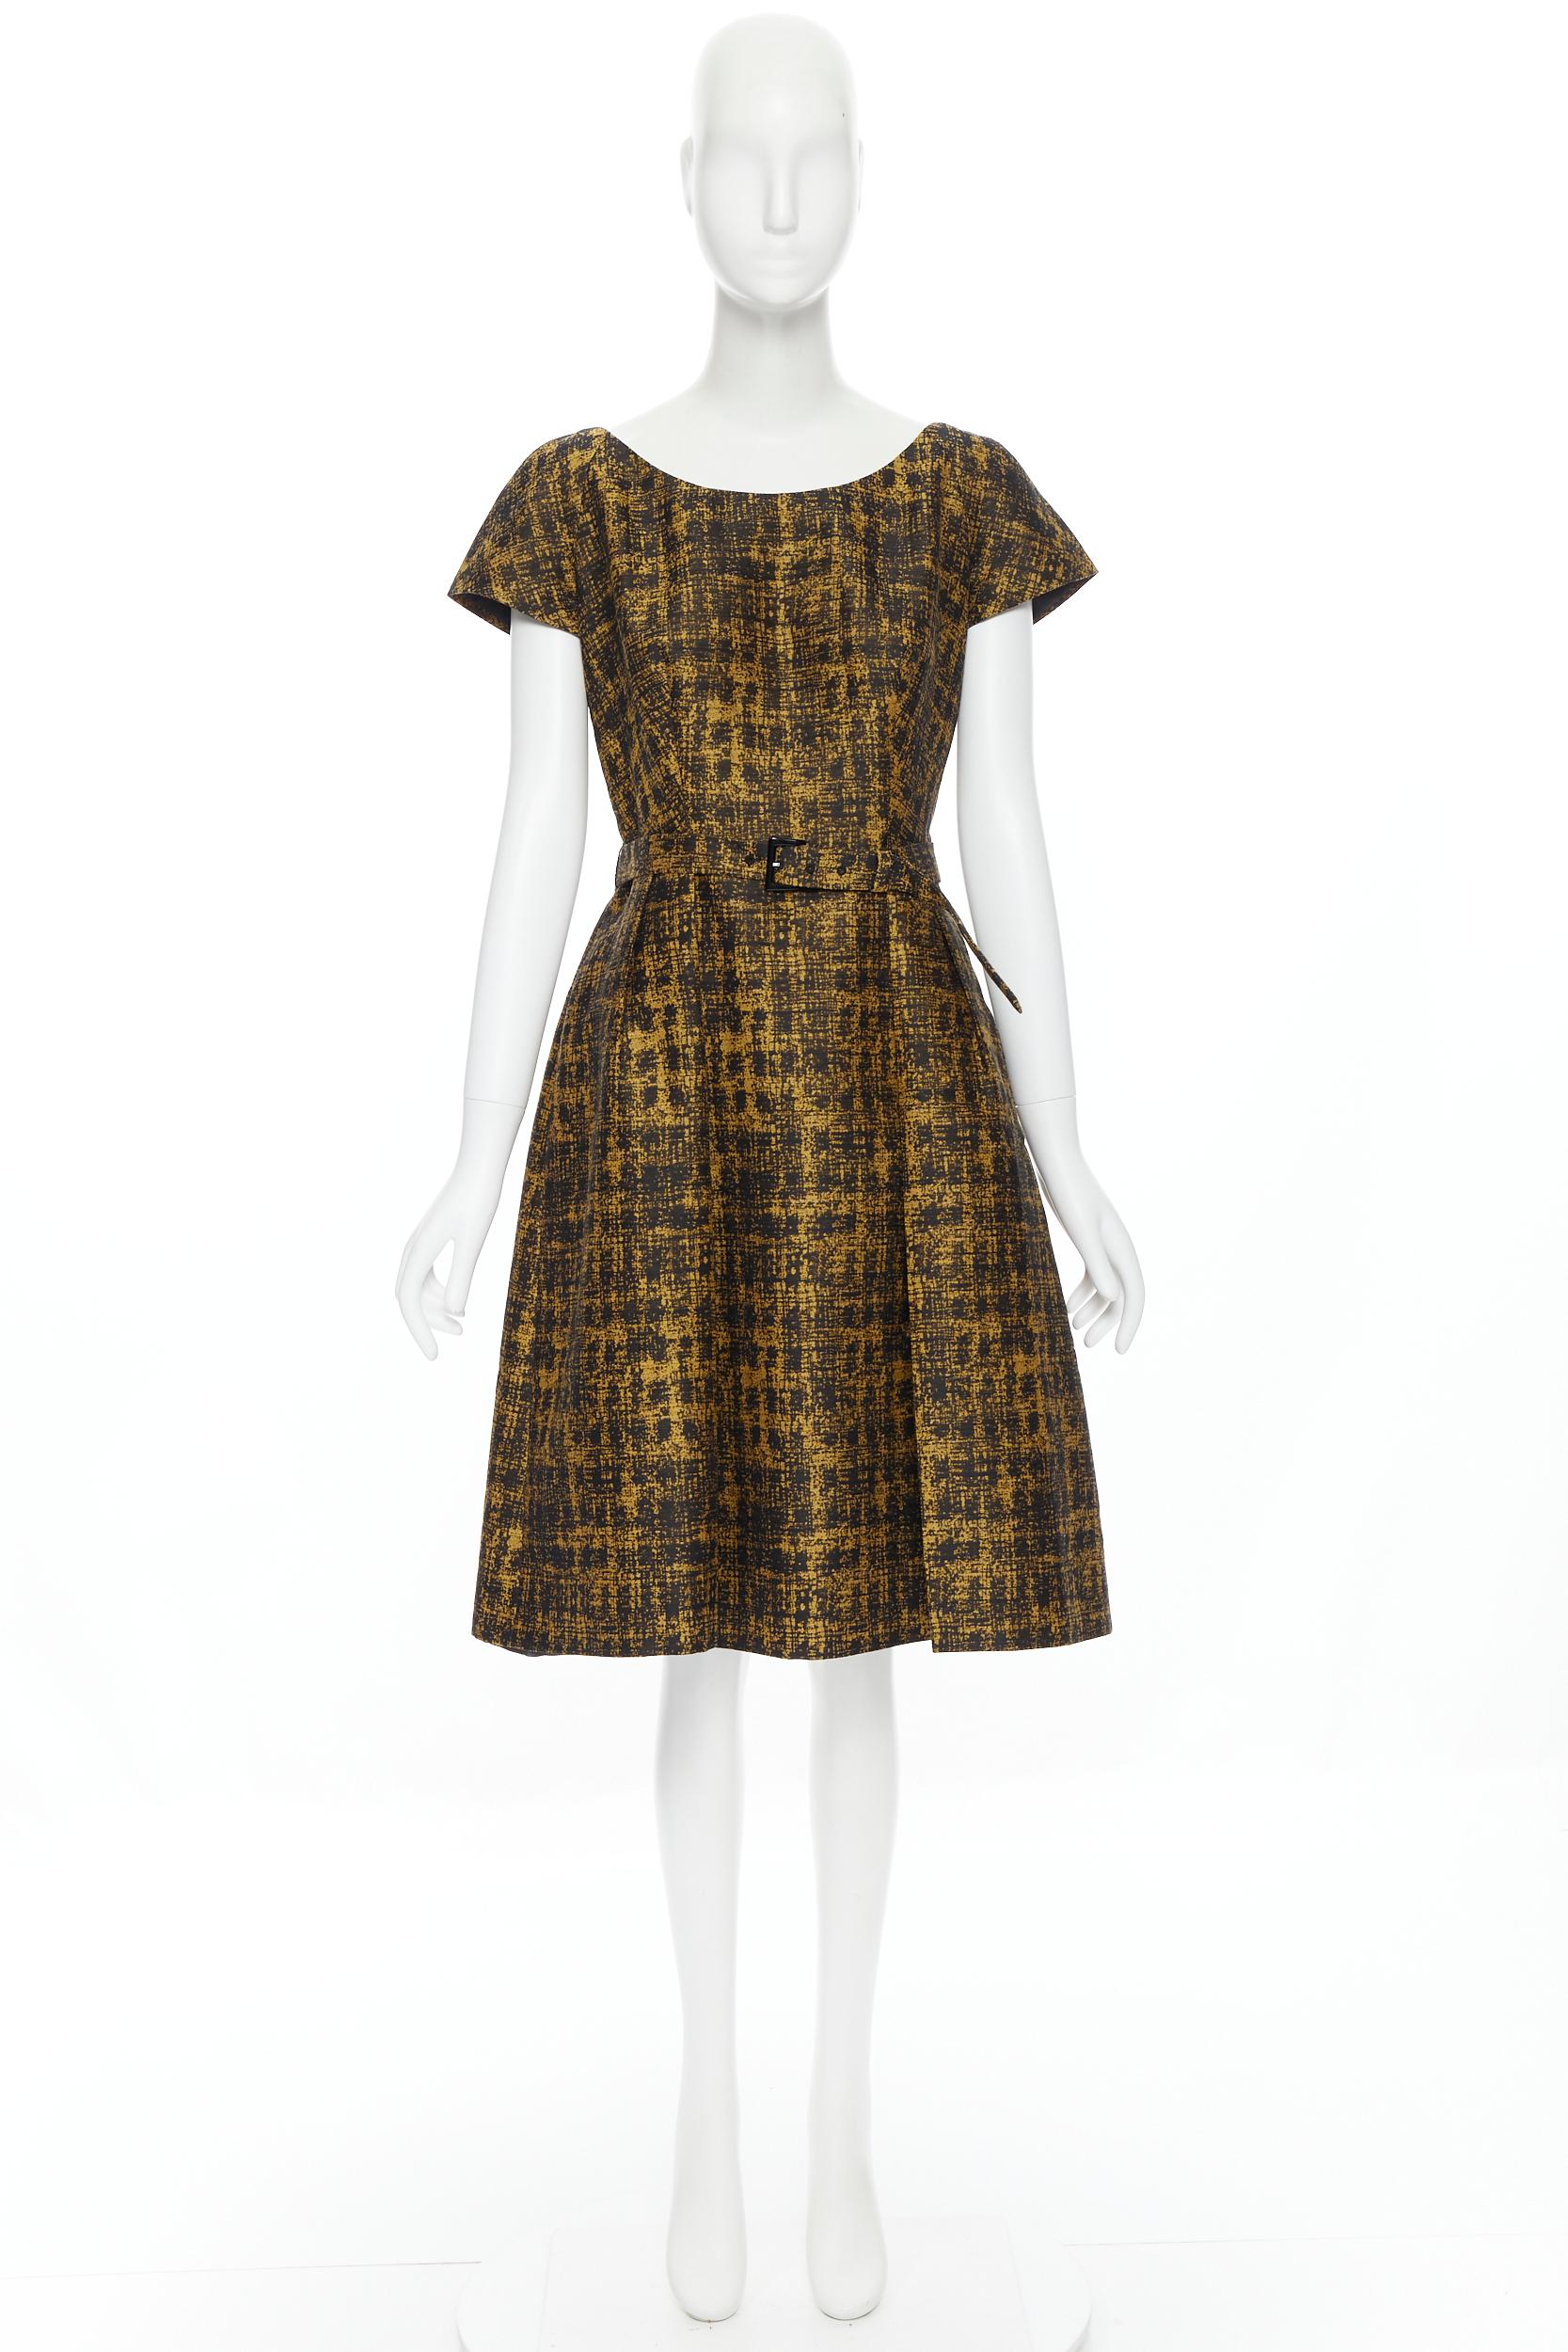 Brown PRADA 2013 gold black wool silk jacquard cap sleeve belted A-line dress IT44 M